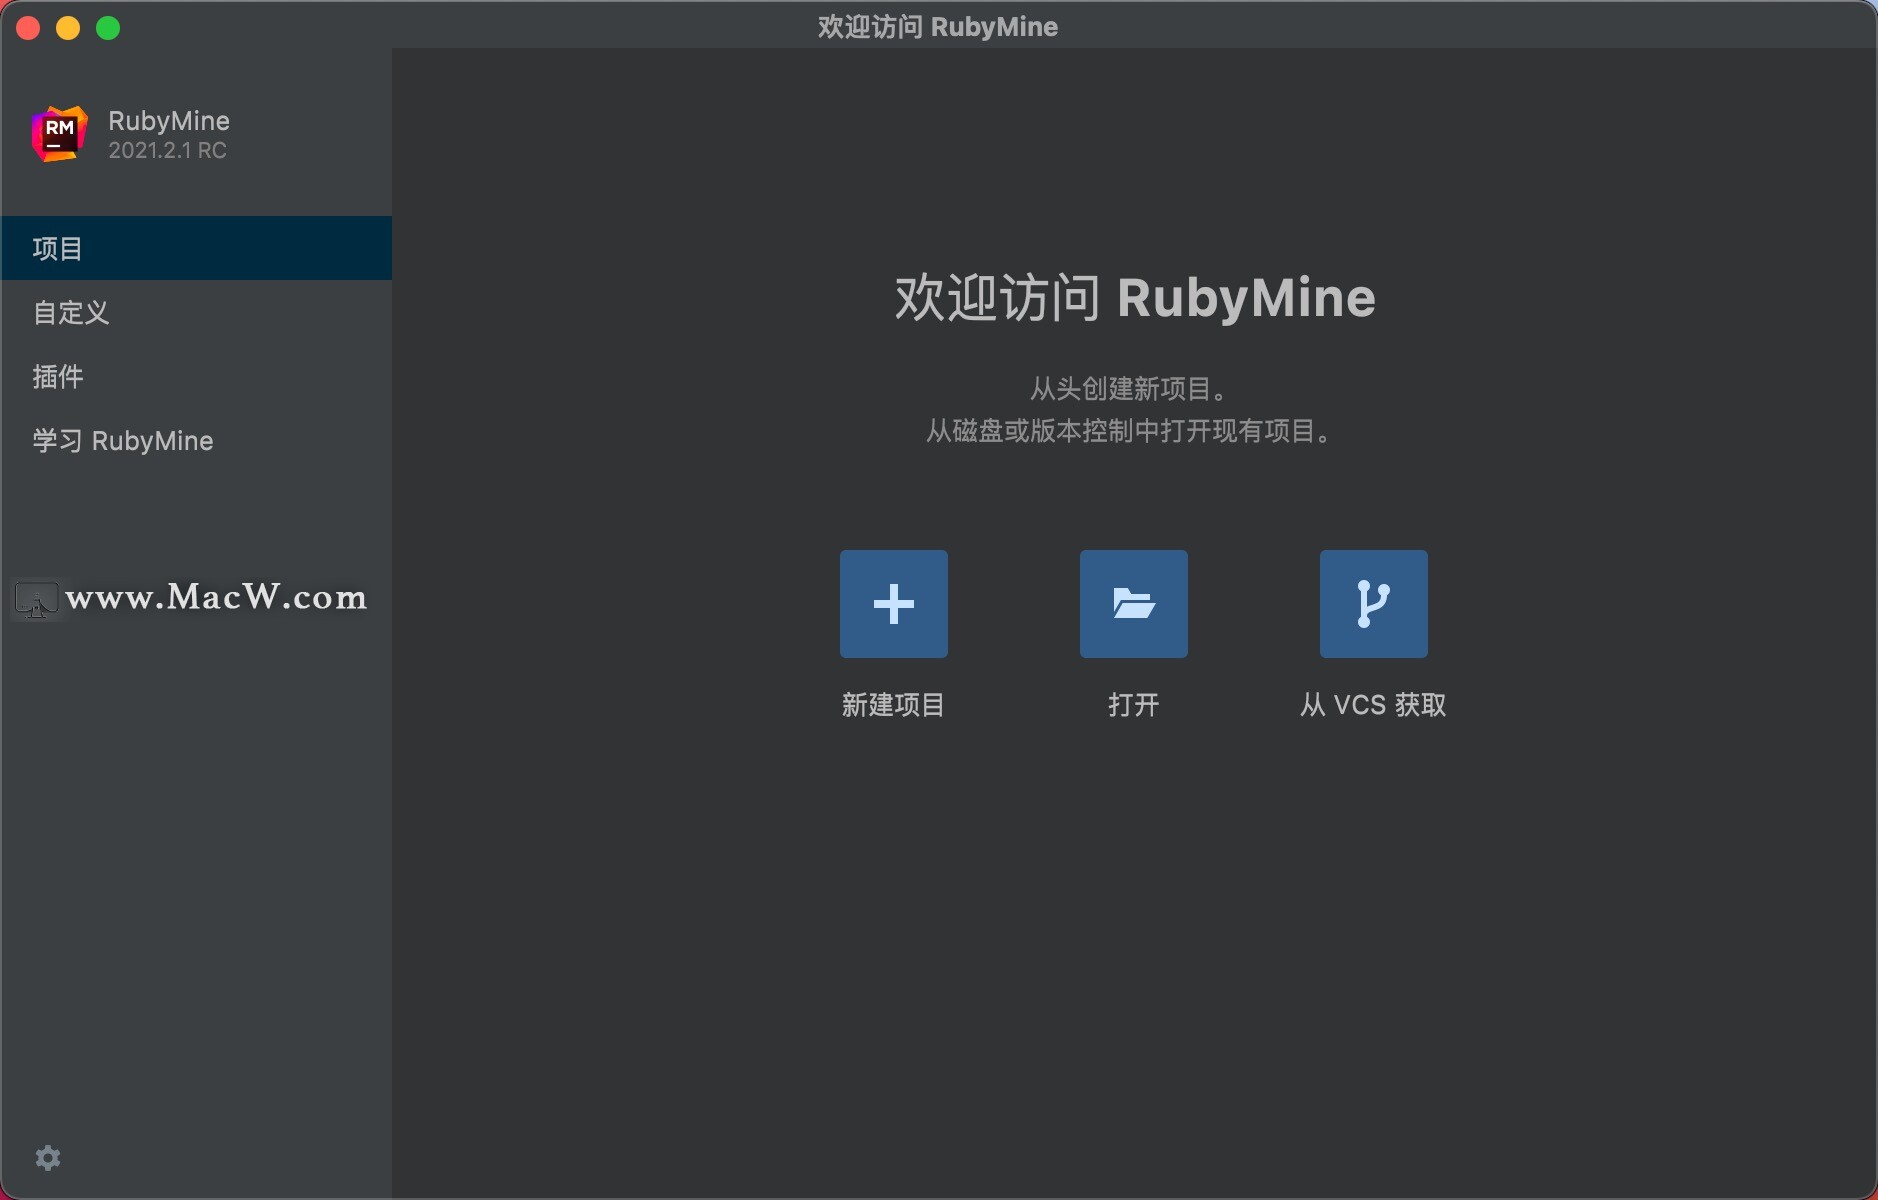 Mac Ruby代码编辑工具 JetBrains RubyMine 2021.2.1RC - 图1